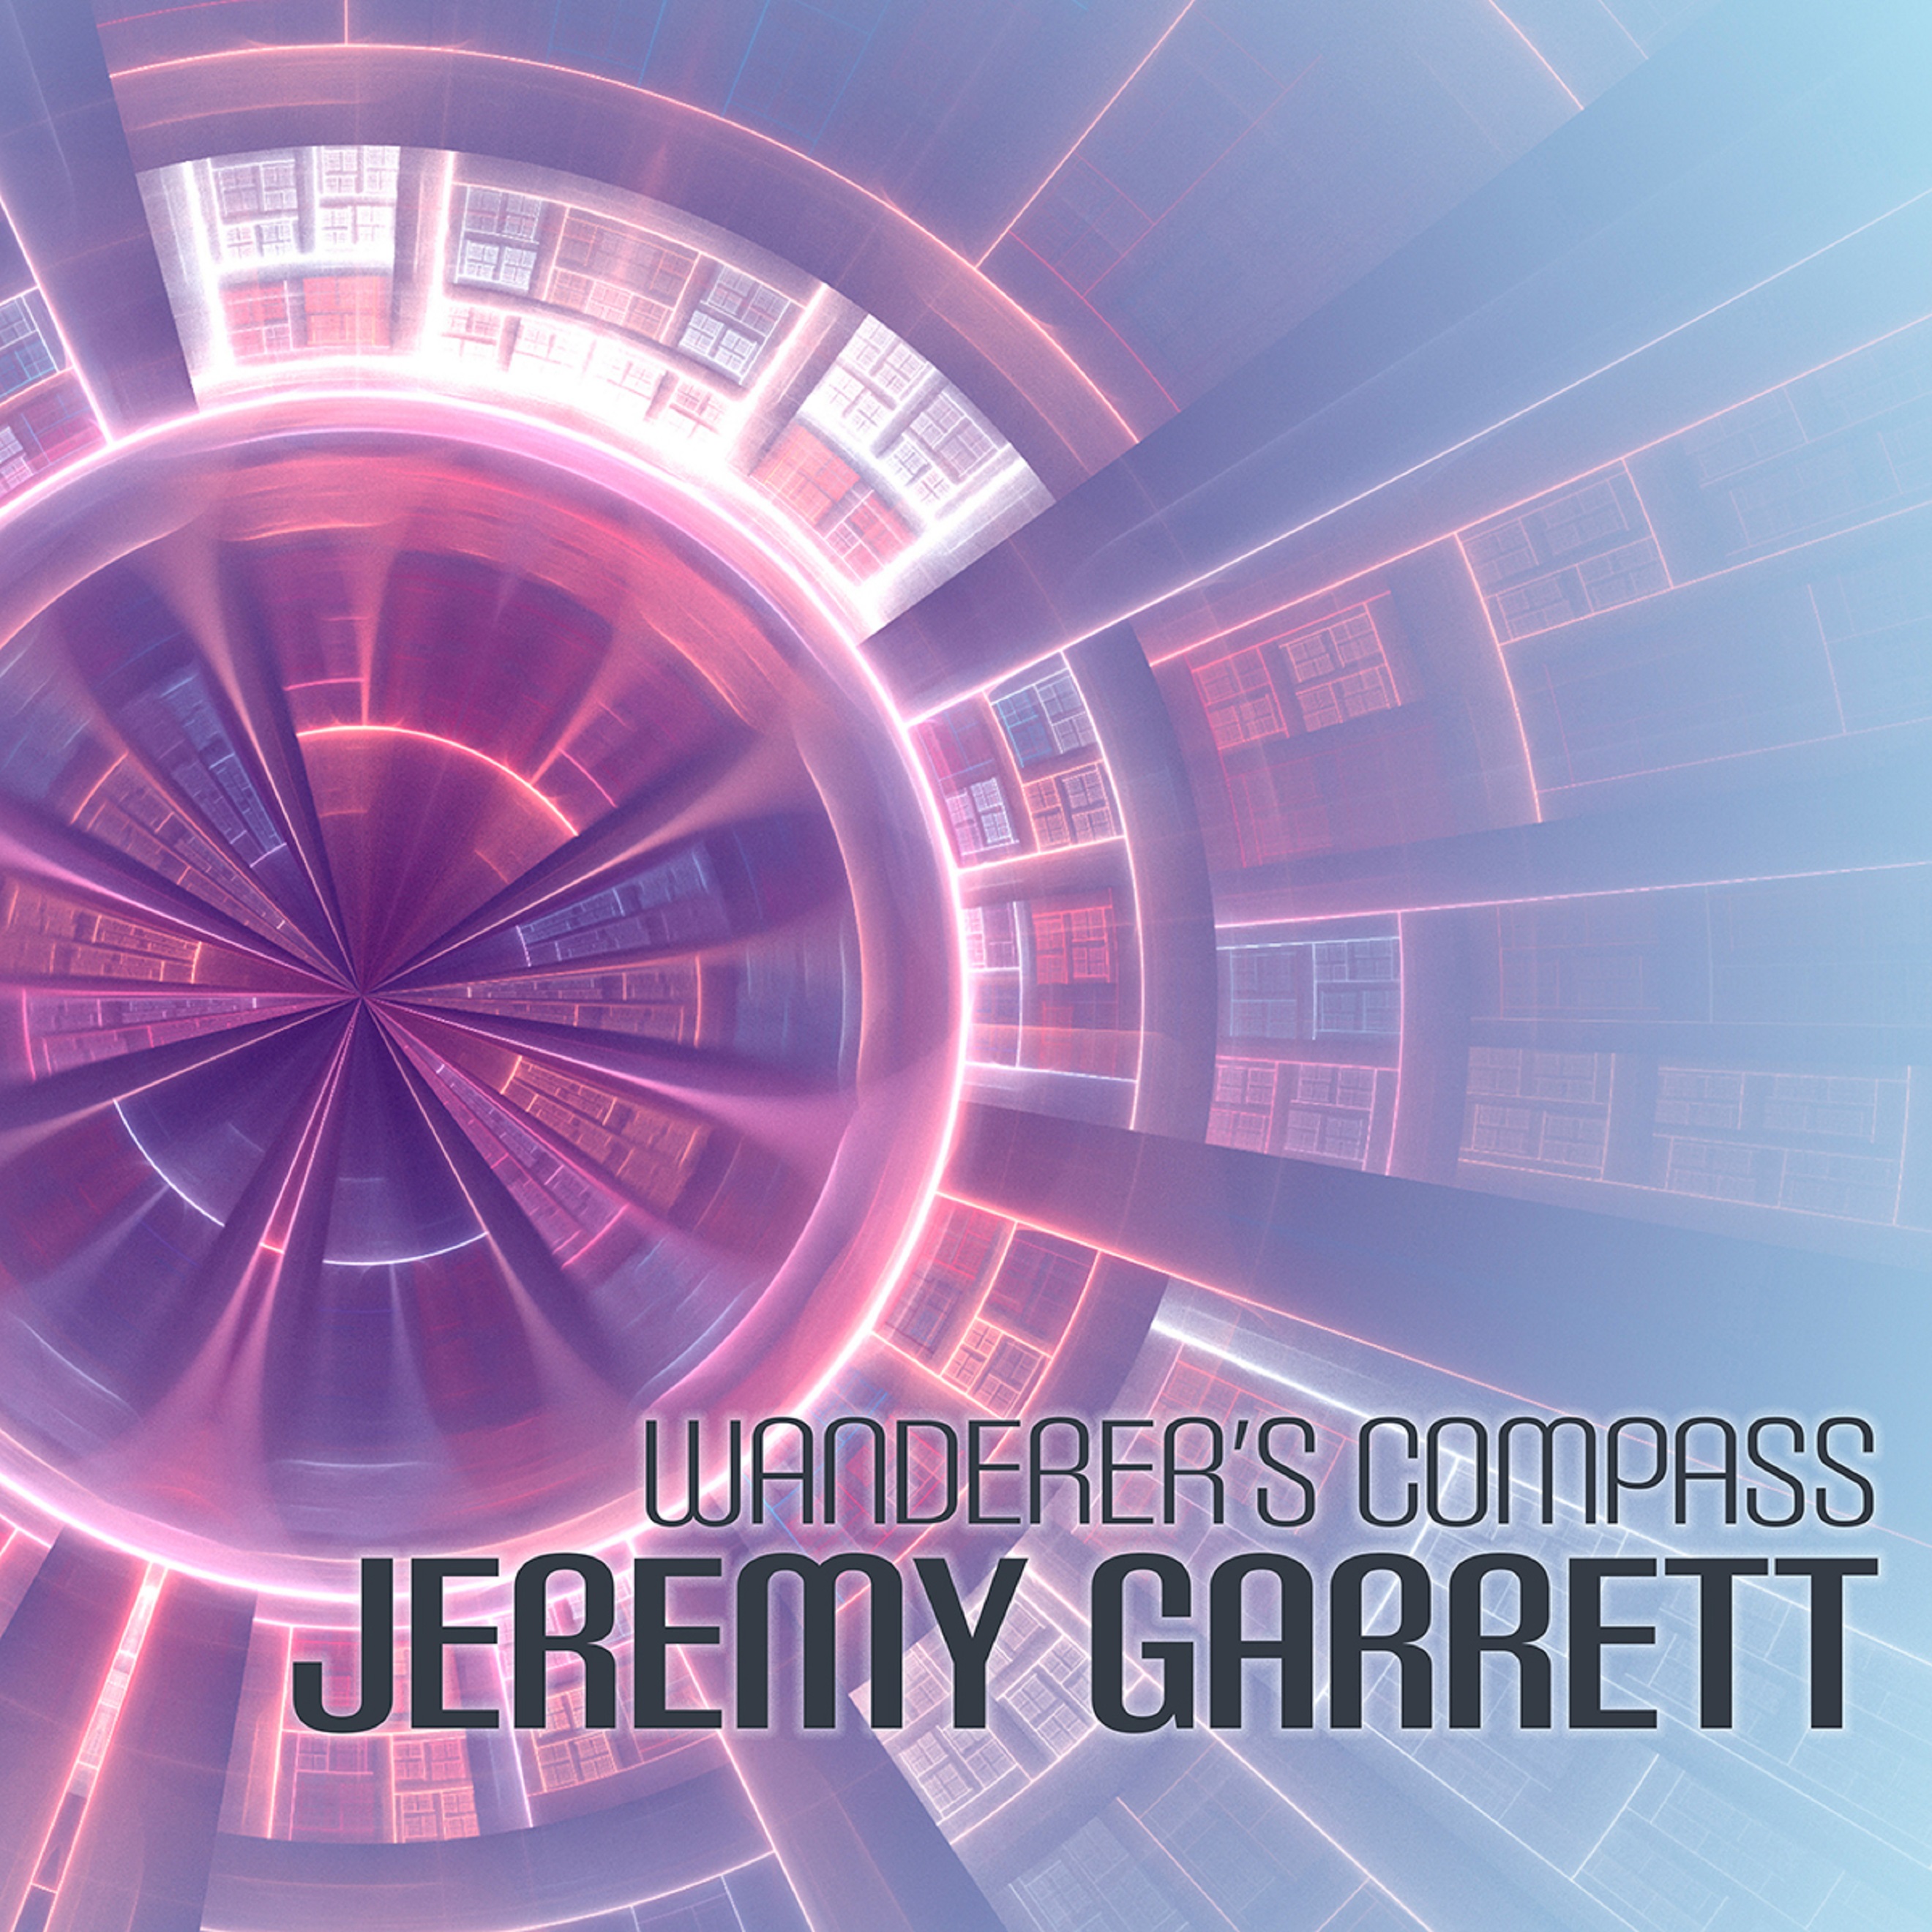 Jeremy Garrett announces upcoming album, Wanderer's Compass